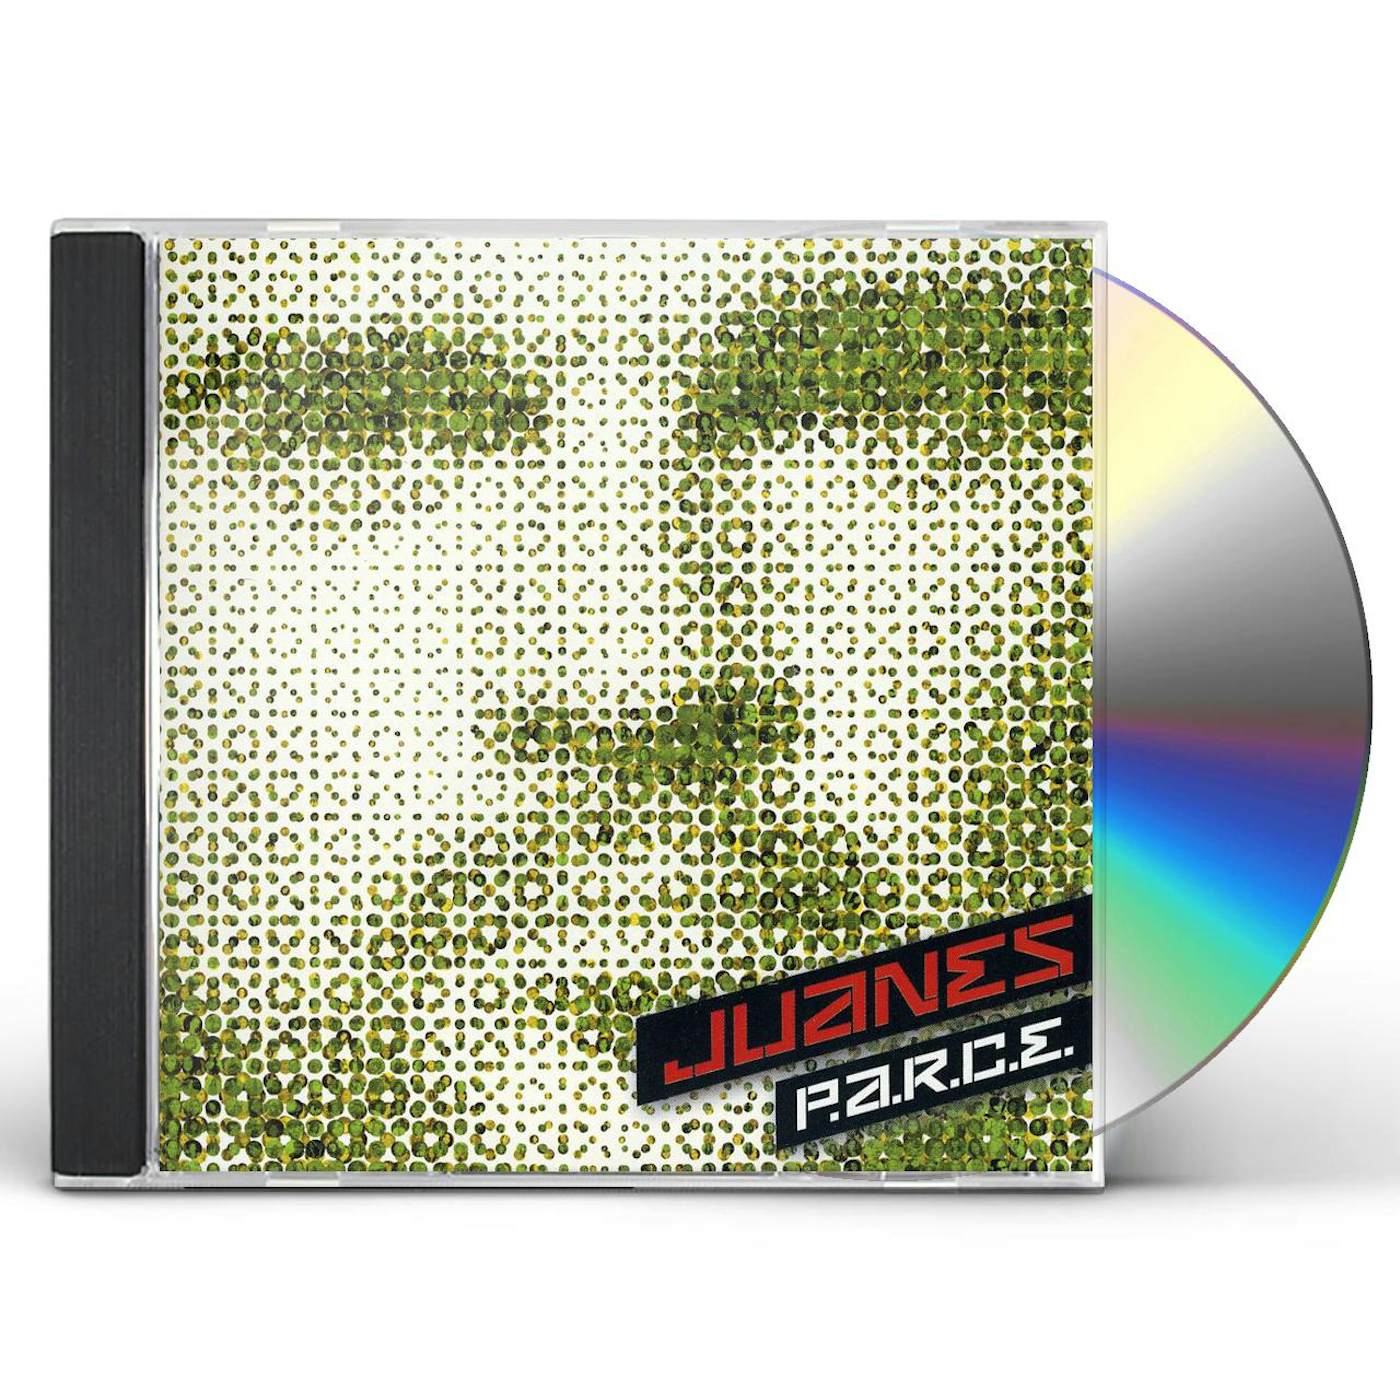 Juanes PARCE CD